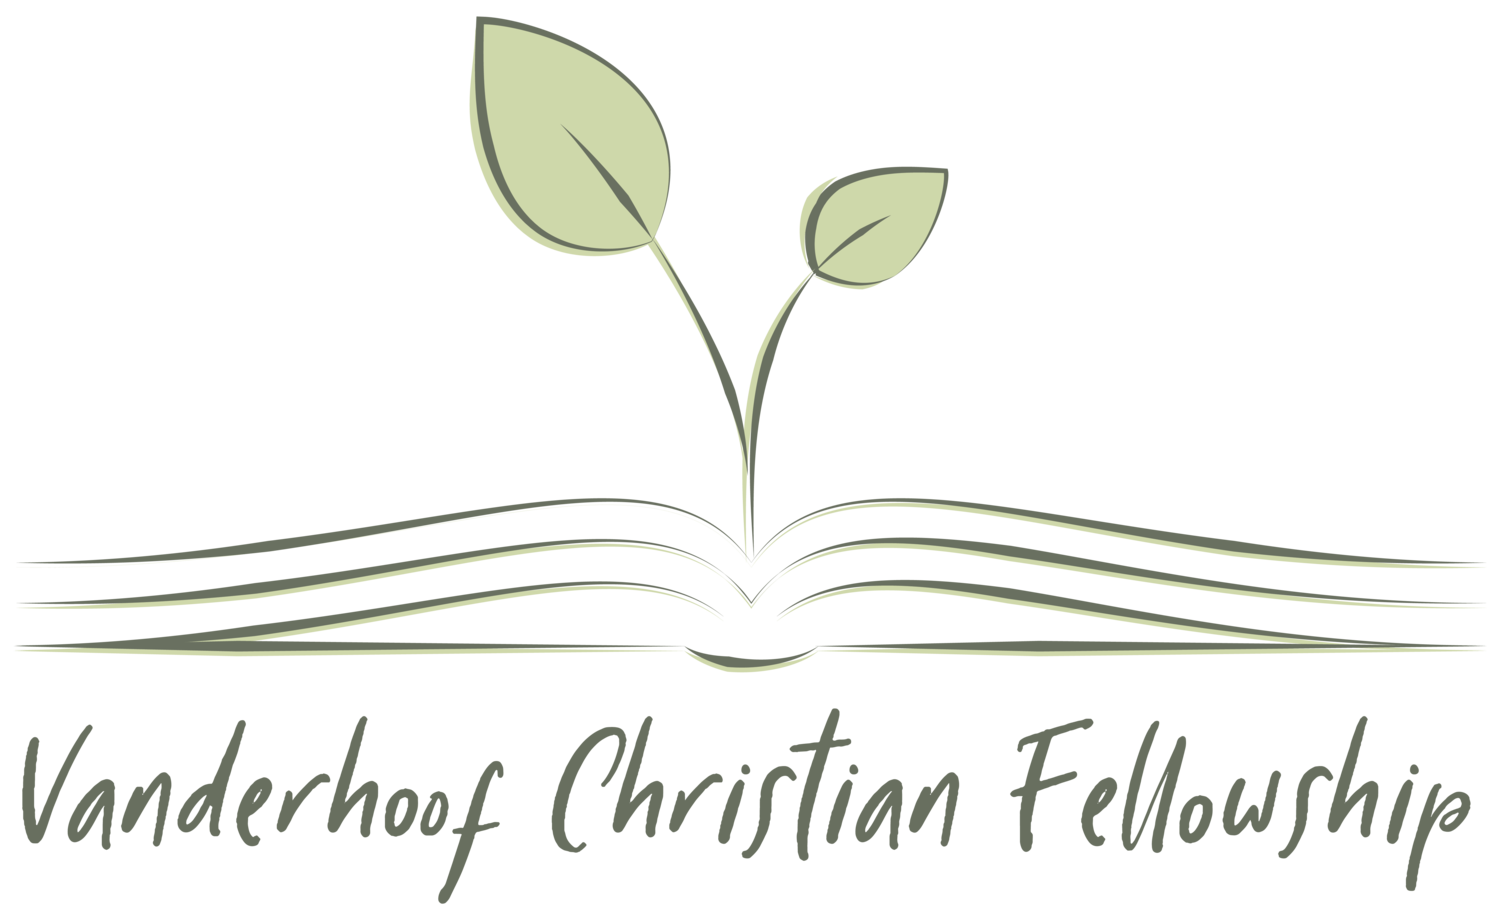 Vanderhoof Christian Fellowship